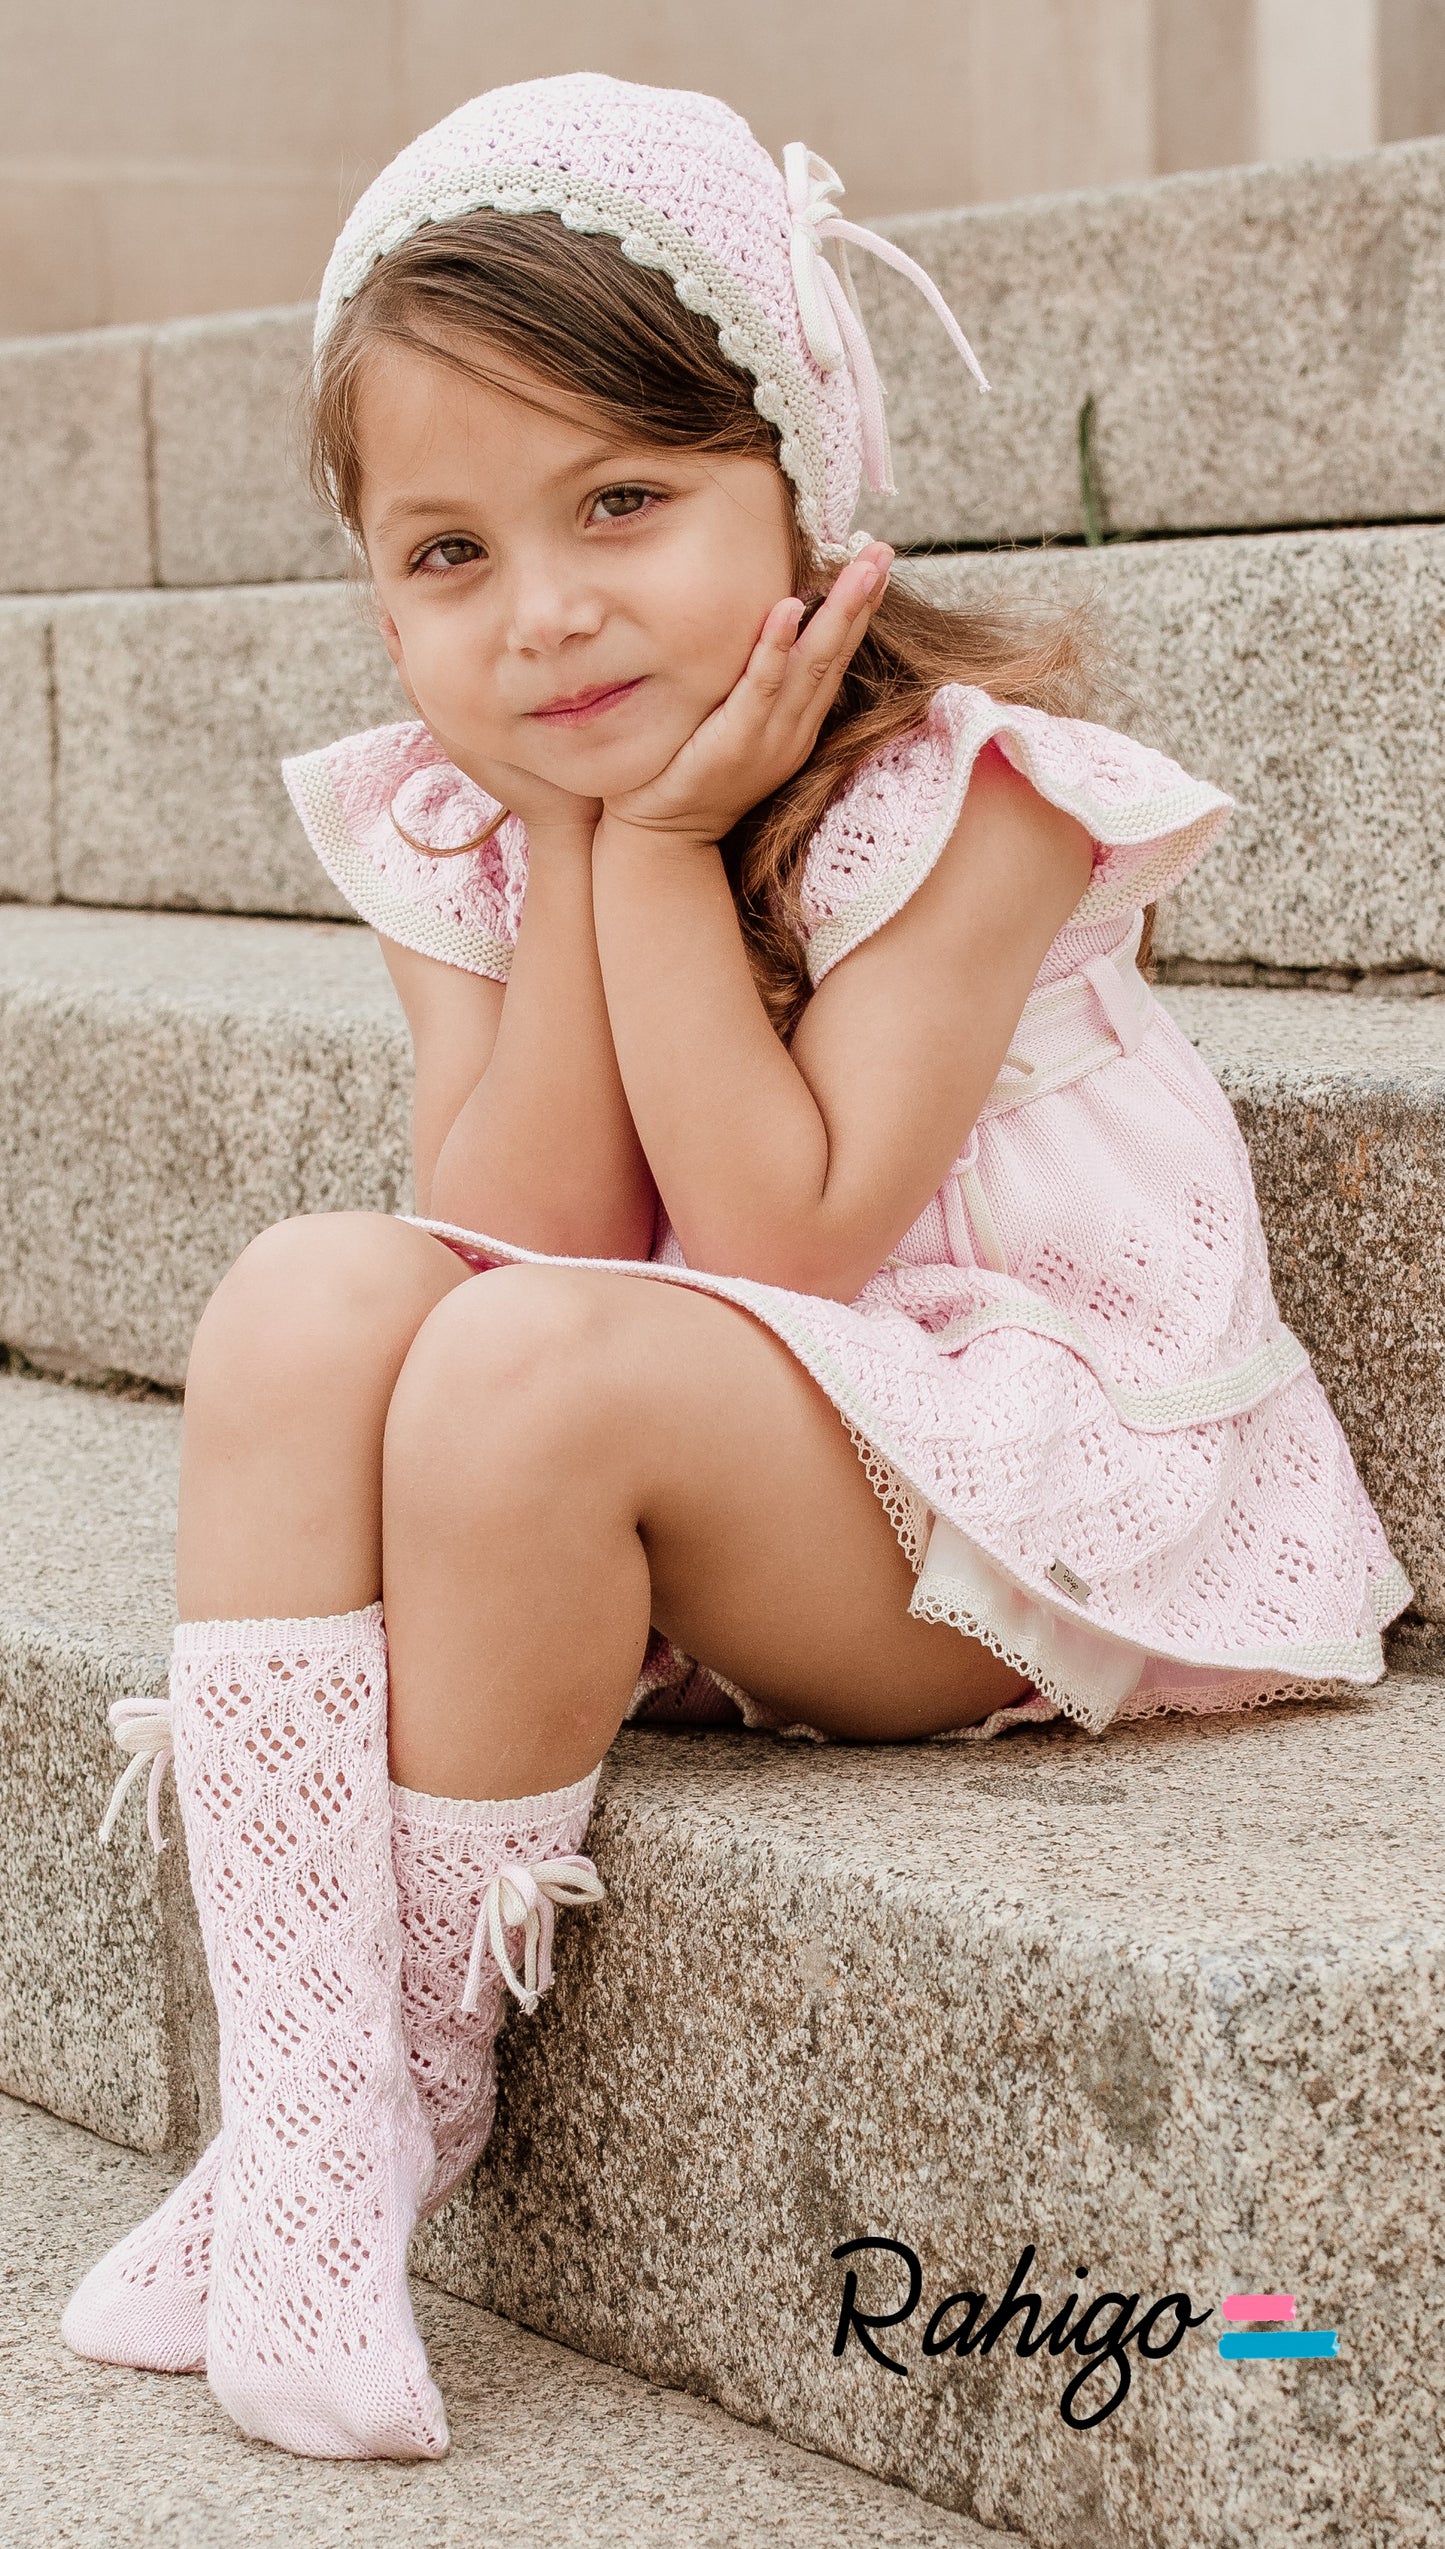 RAHIGO Pink & Cream Girls A-Line Dress & Knickers - 24135